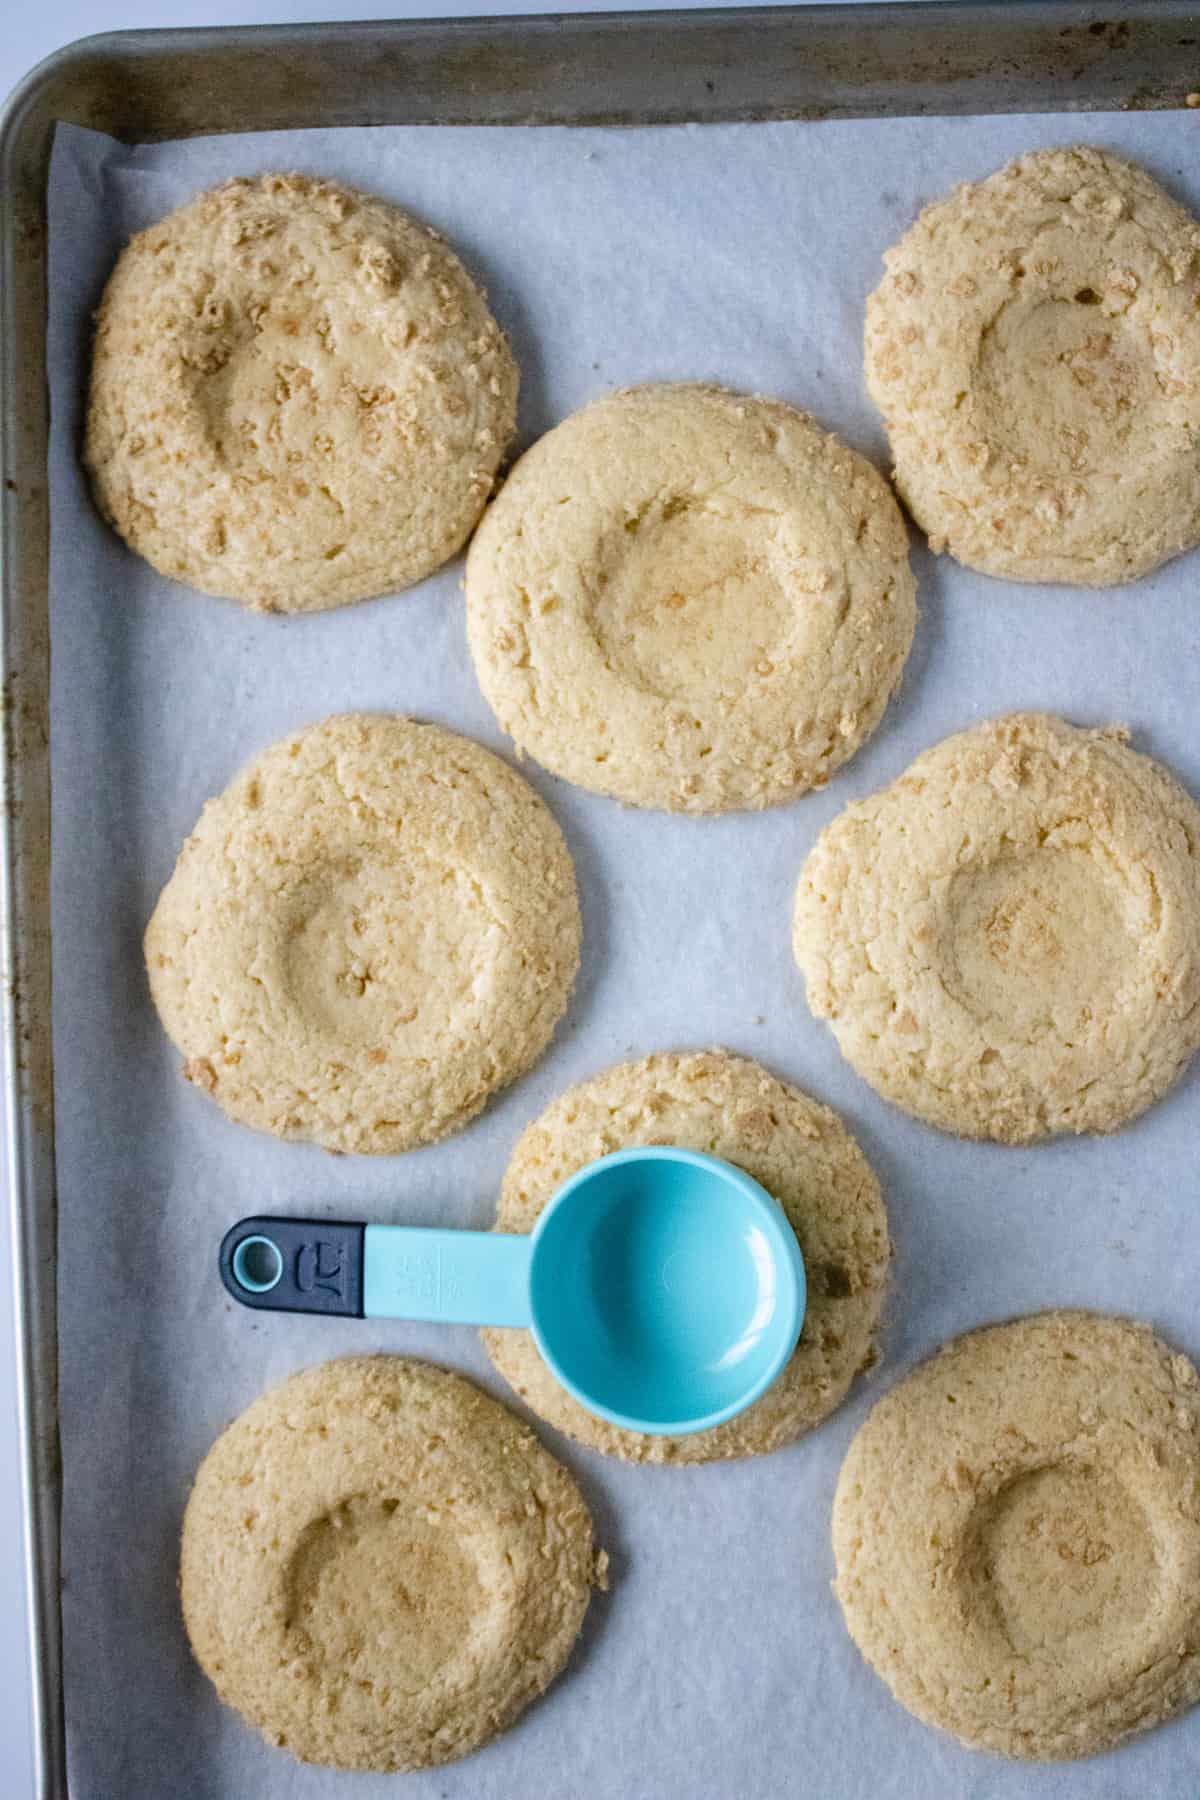 Key Lime Crumbl cookies on baking sheet.